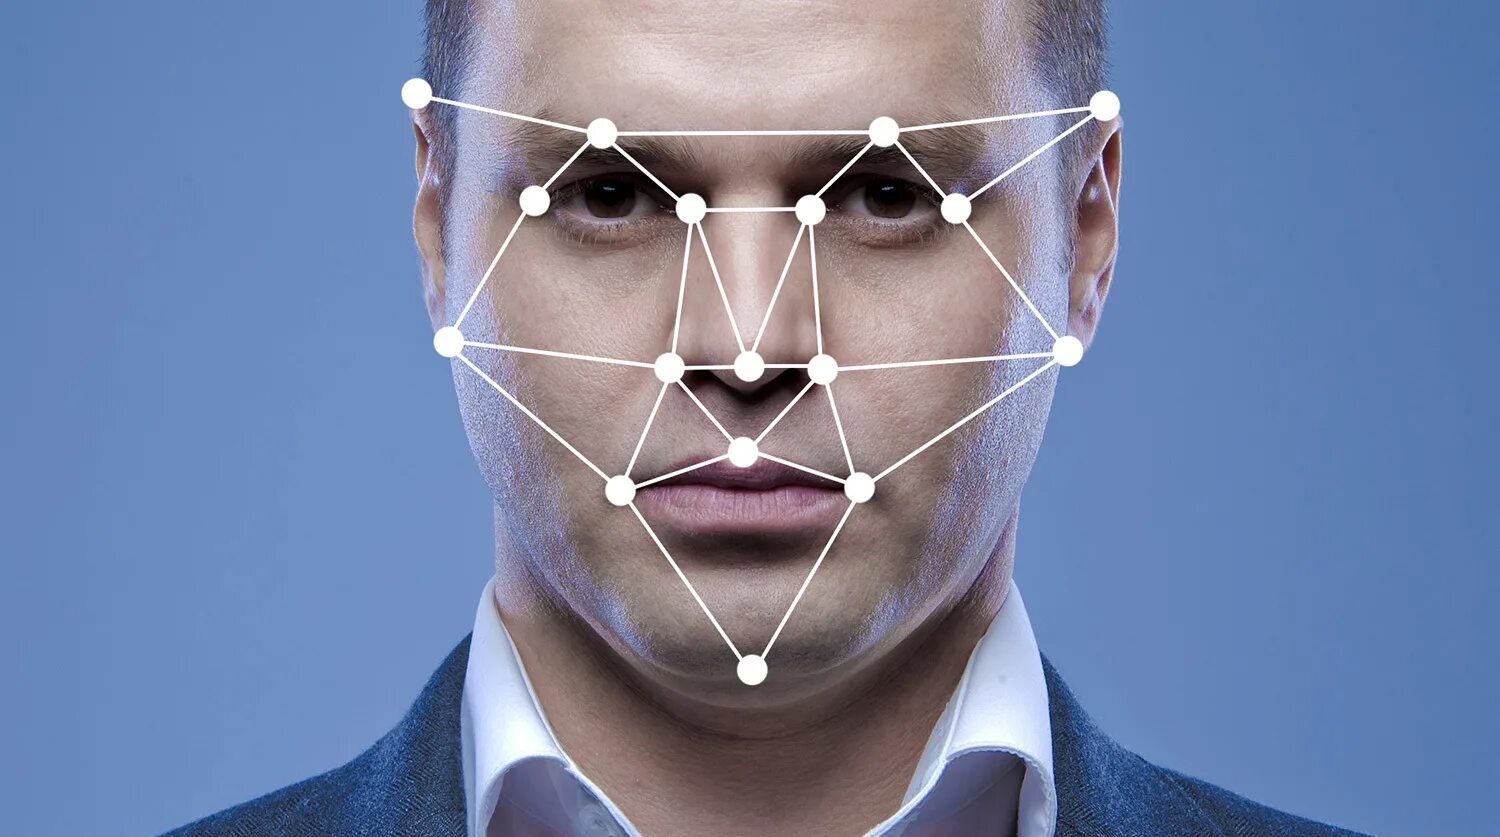 Фото по изображению. Нейросети распознавание лиц. Геометрия лица. Идентификация человеческого лица. Биометрия лица.